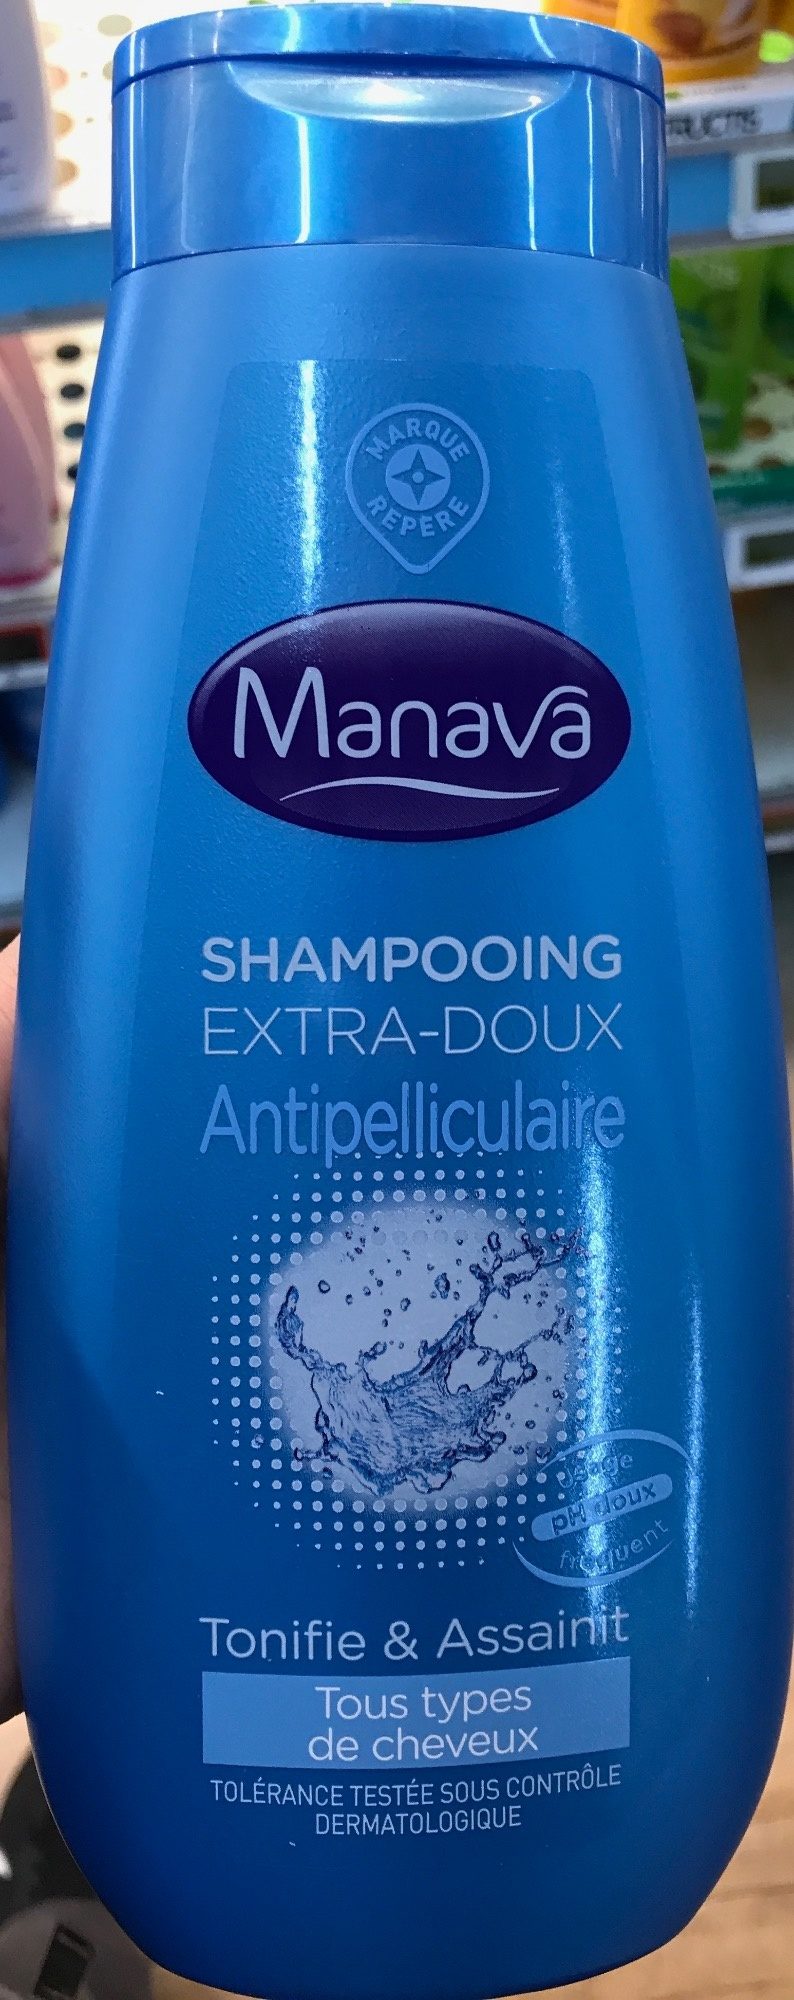 Shampooing extra-doux antipelliculaire - Produit - fr